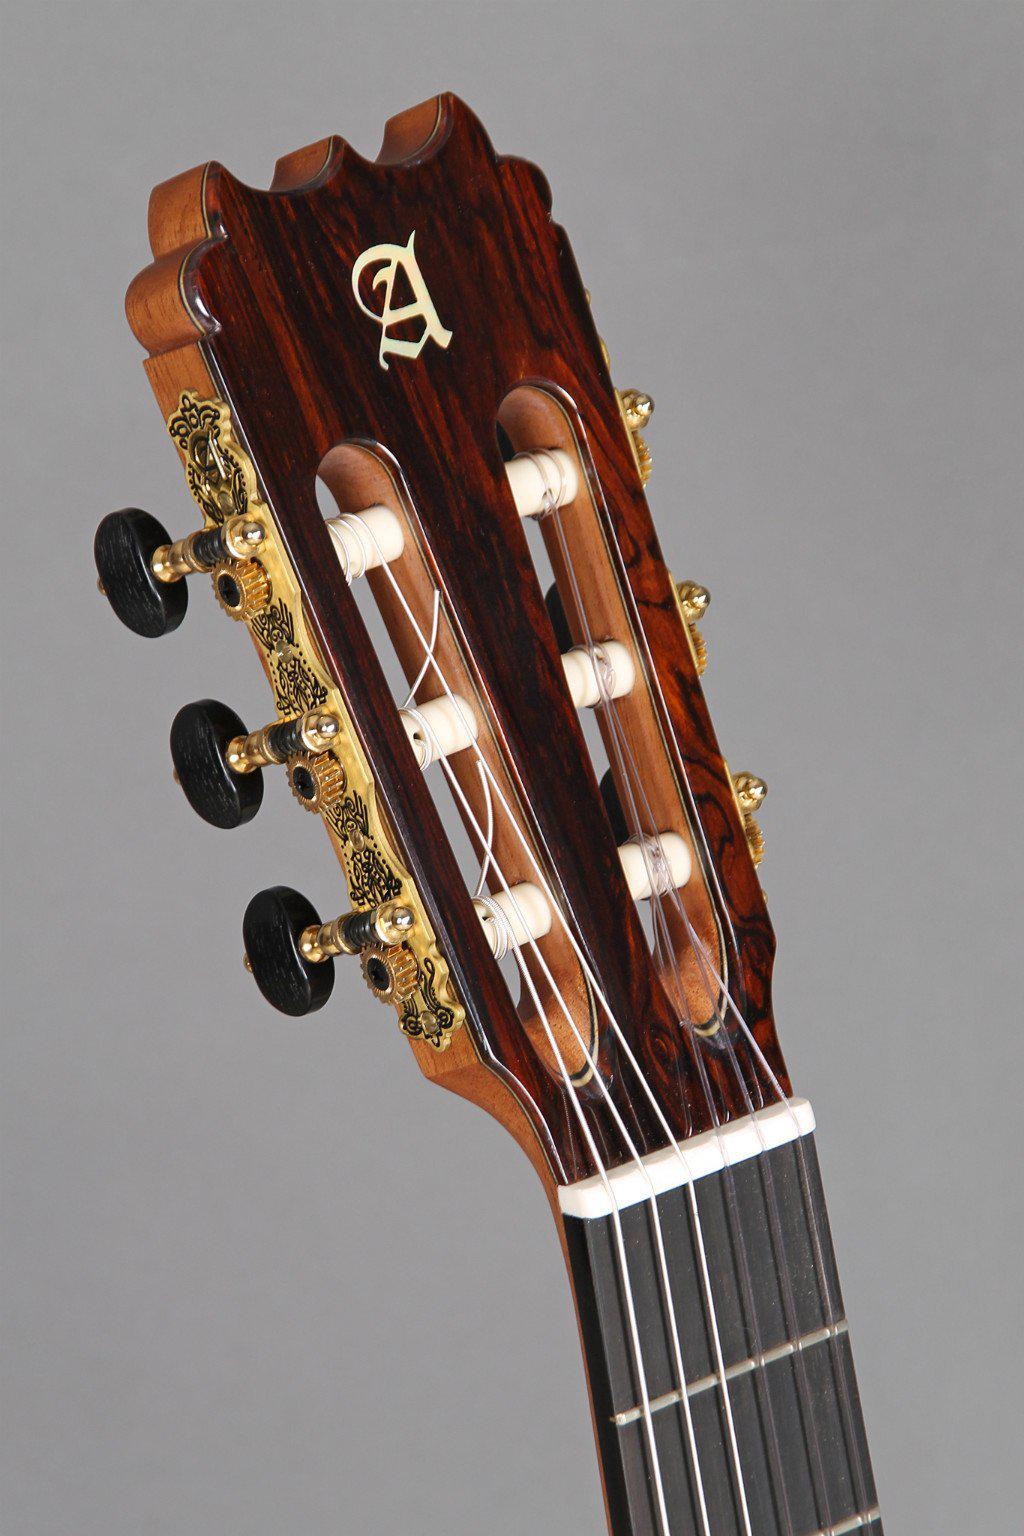 Alhambra 10Fp Pinana - Negra Flamenco Guitar